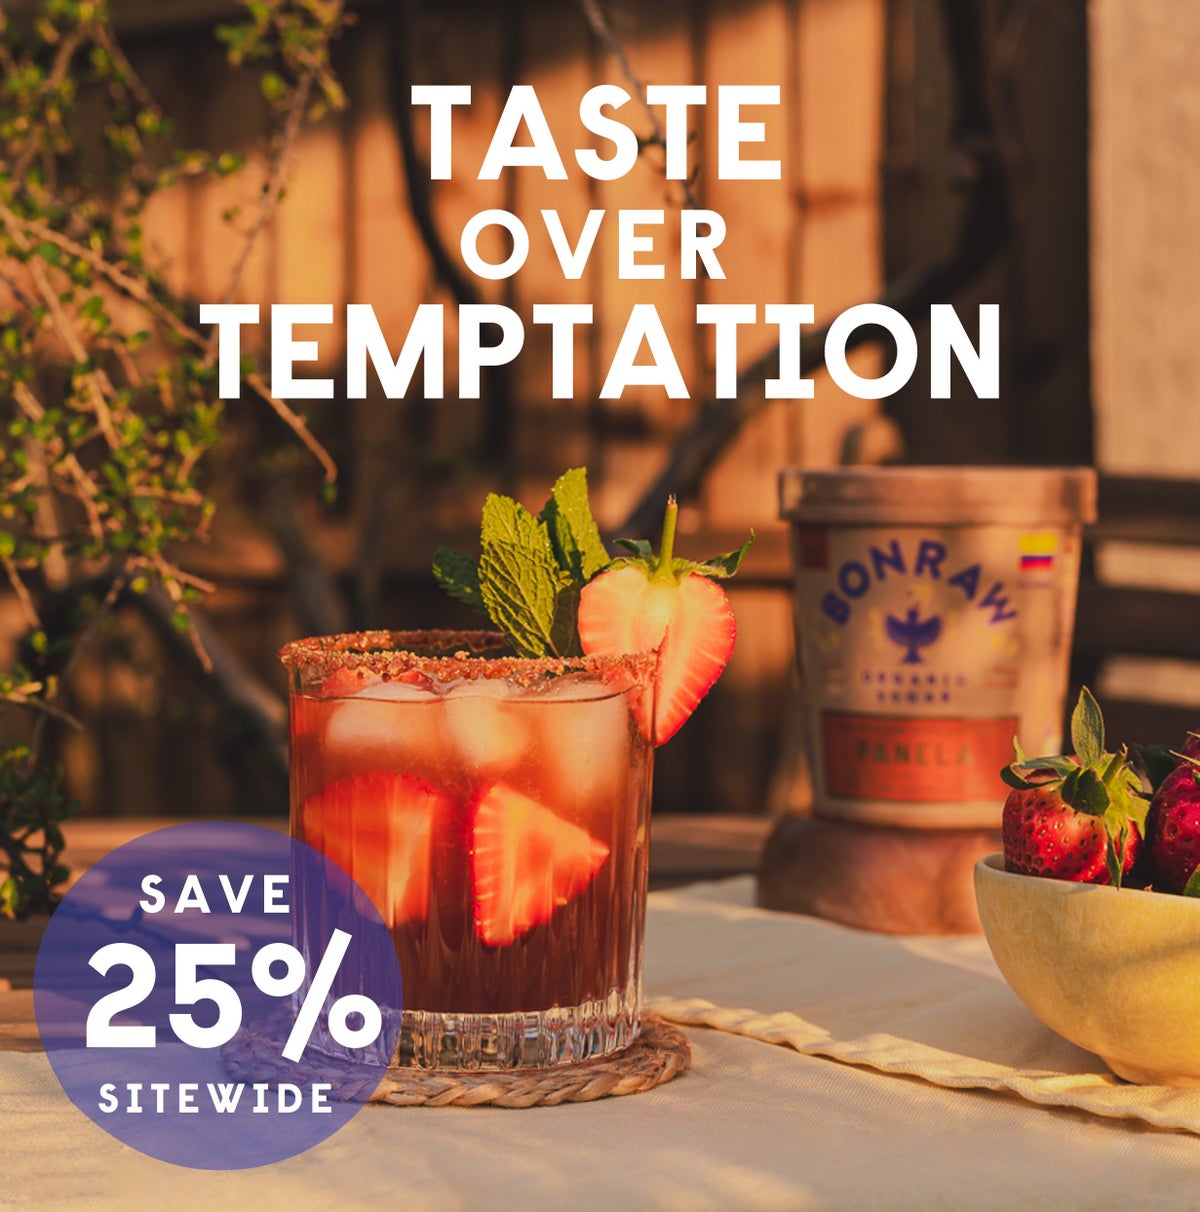 Taste over temptation! 25% off everything!